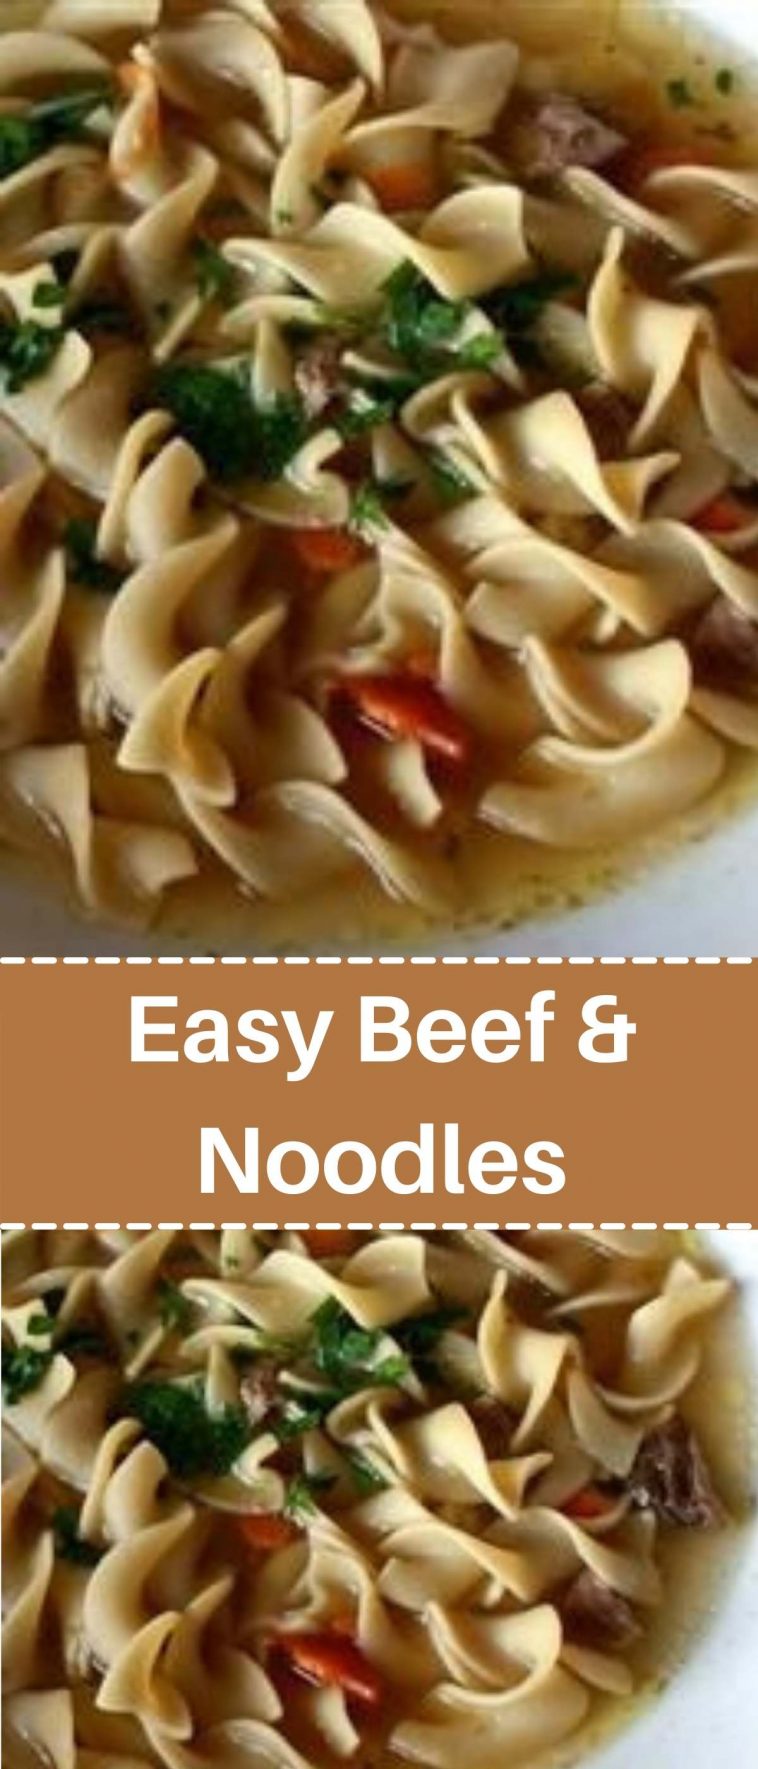 Easy Beef & Noodles